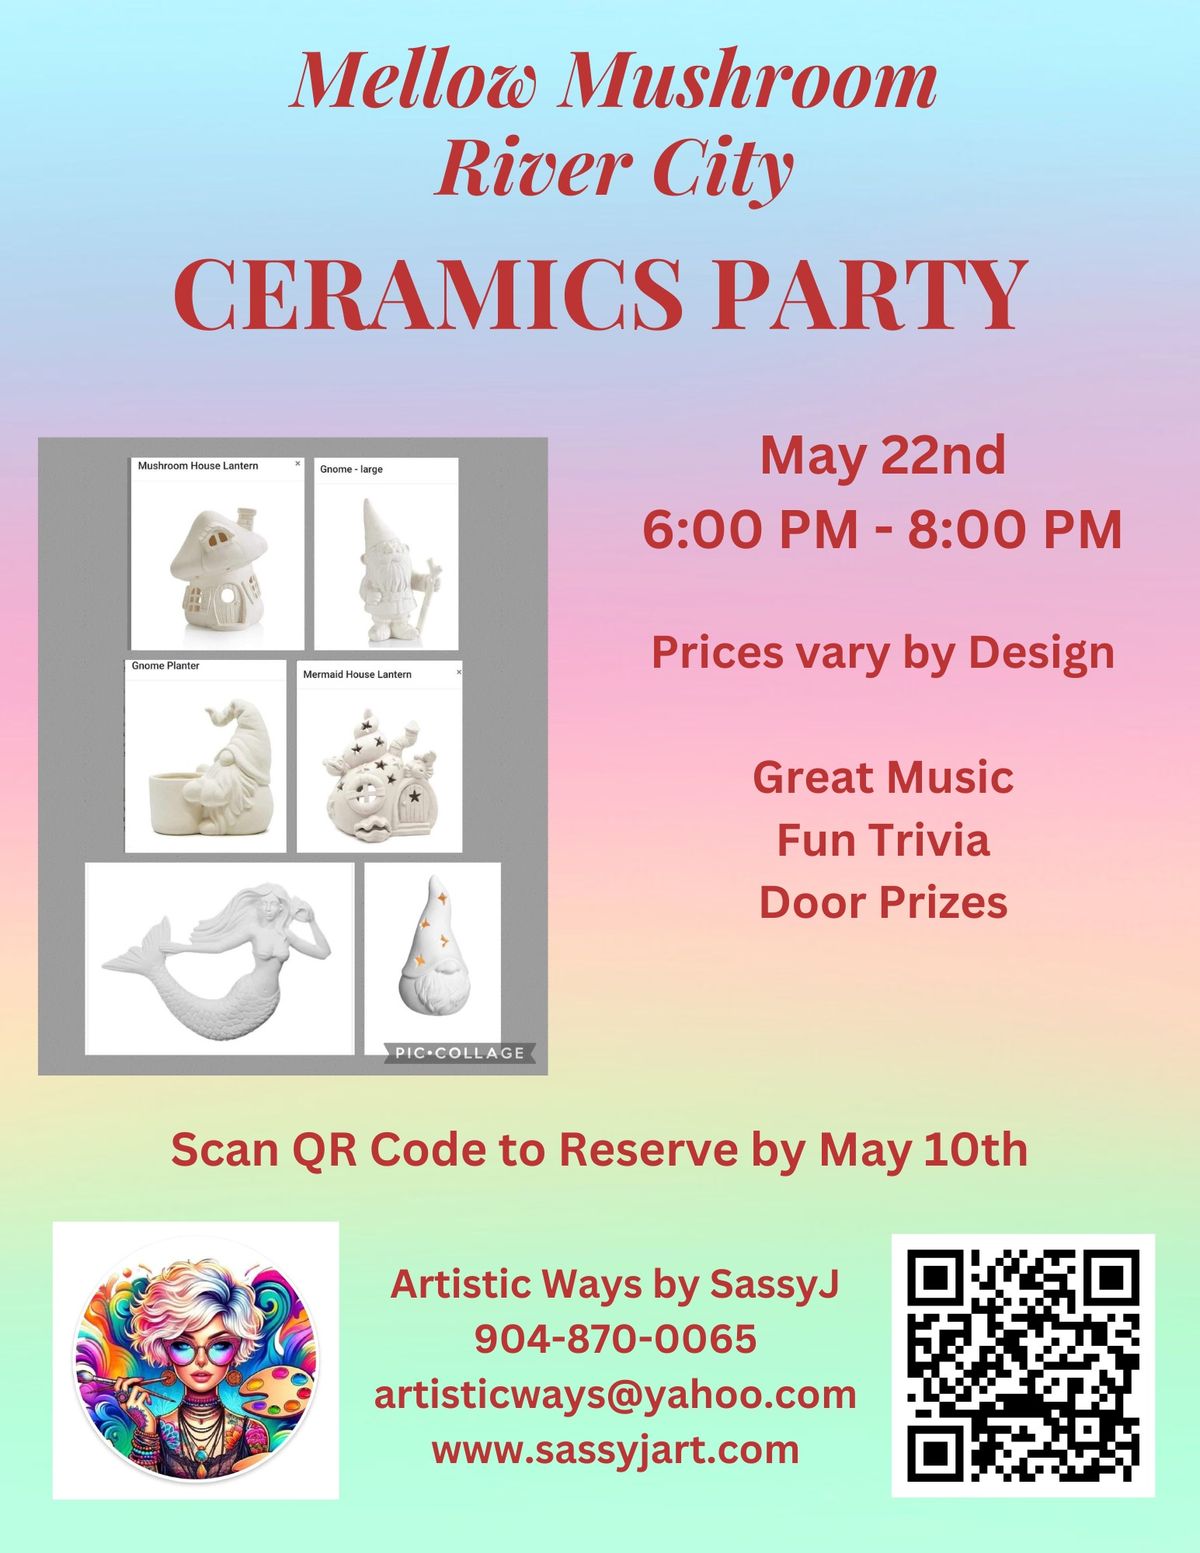 Mellow Mushroom River City, May 22nd, Ceramics Paint Party